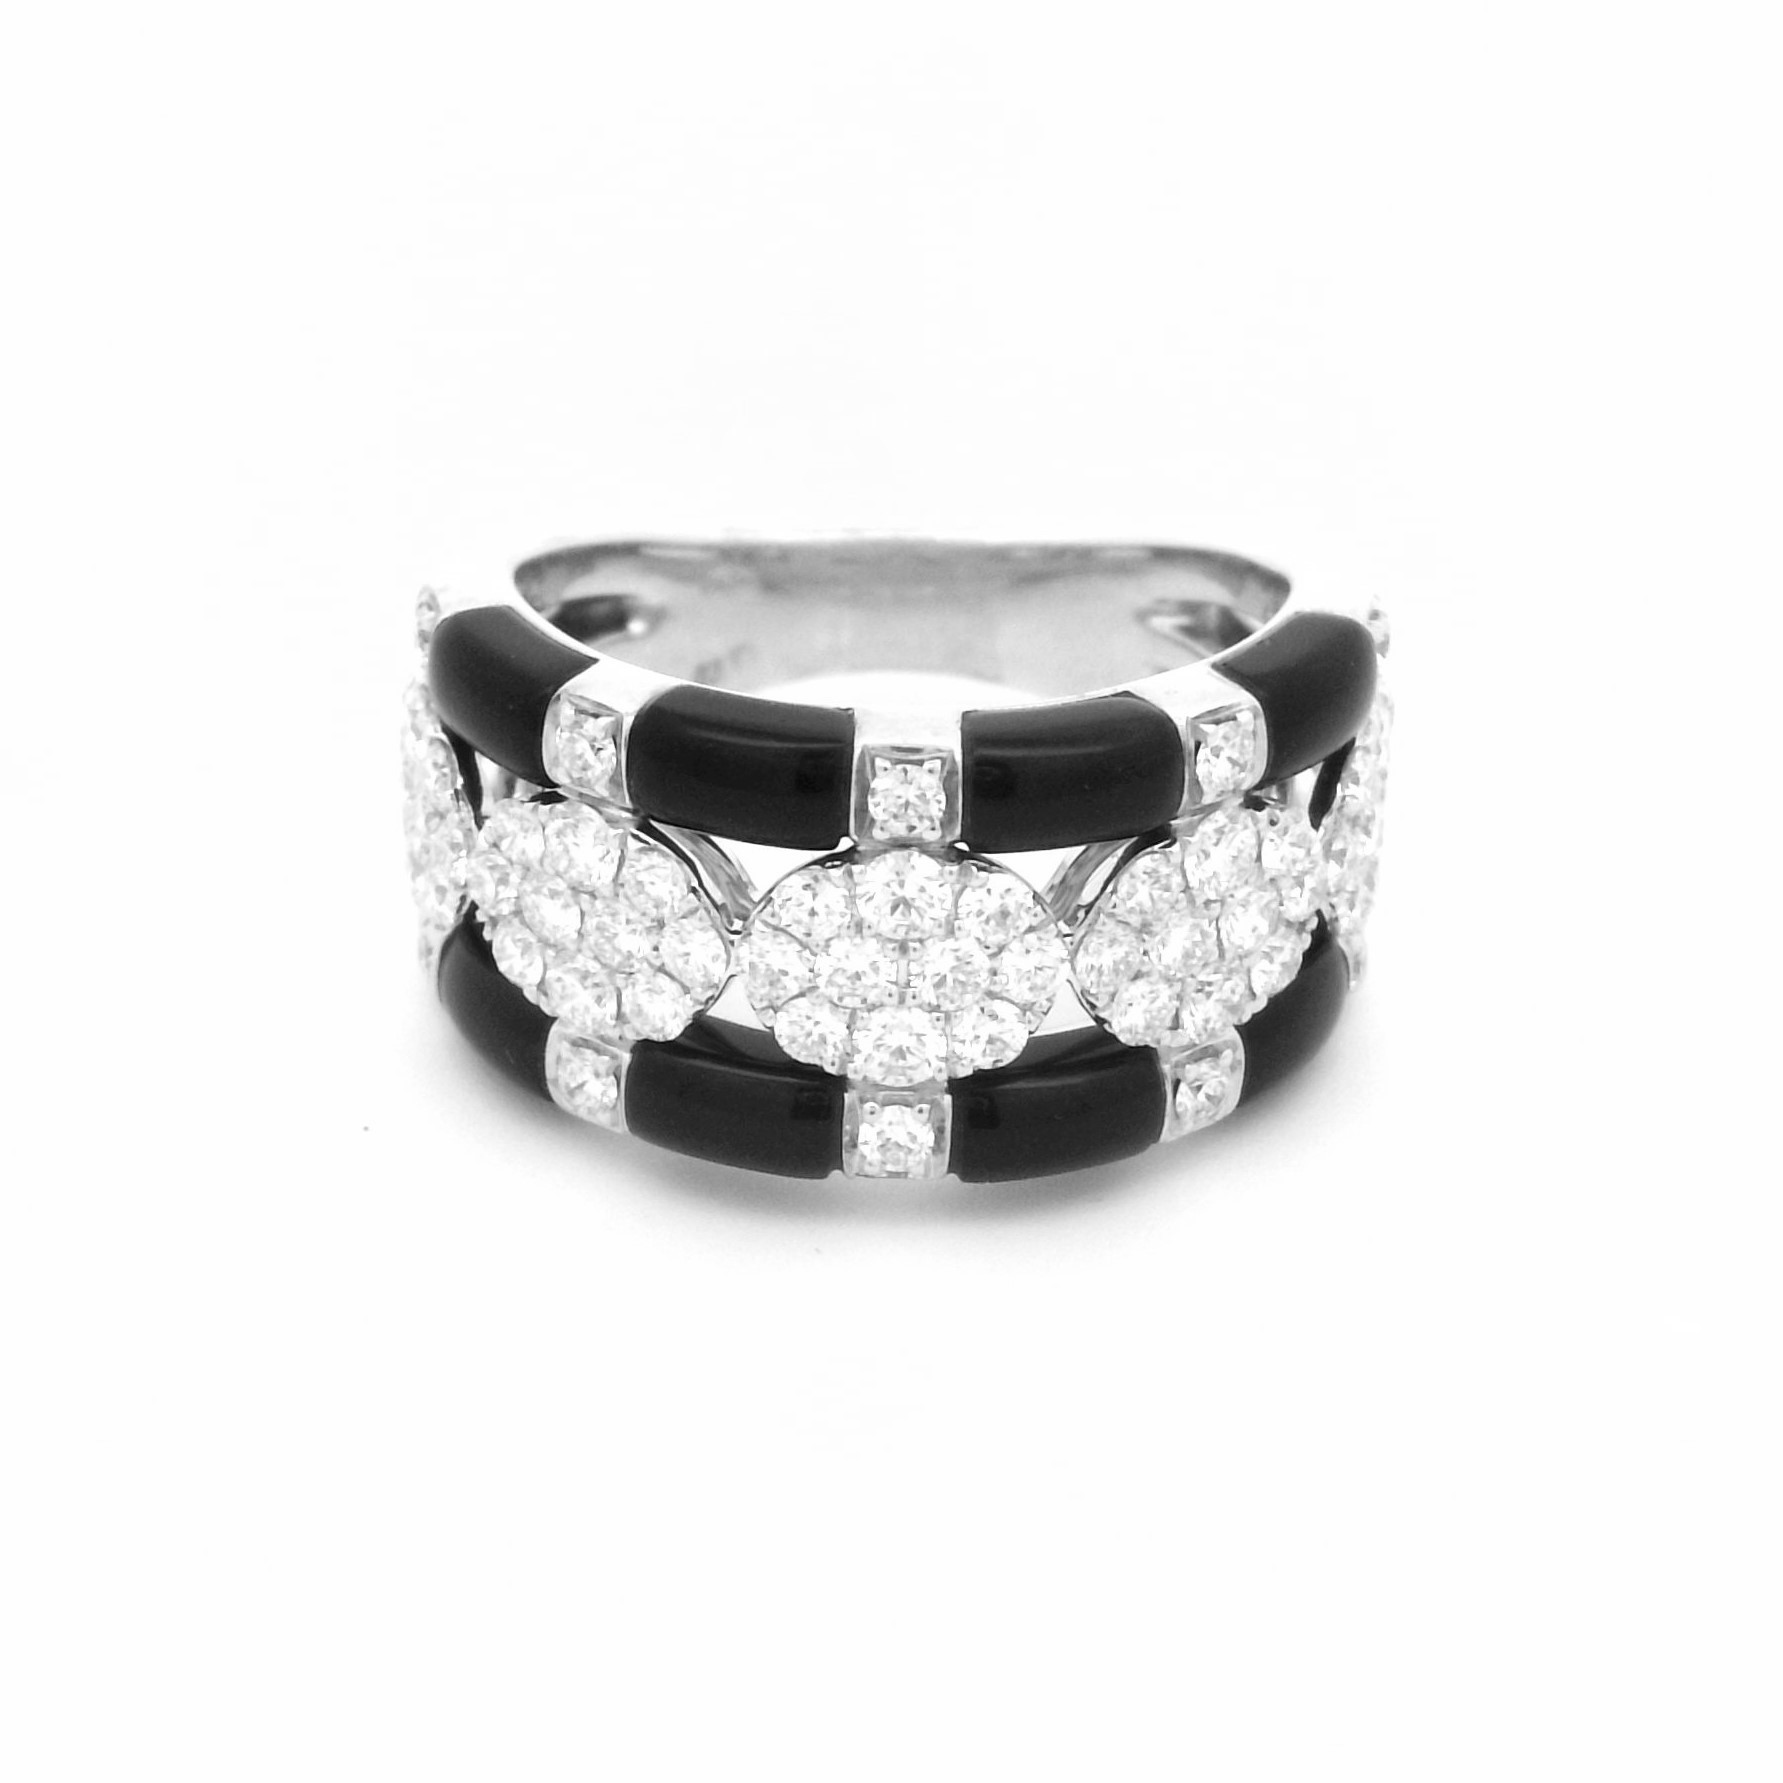 Damaso 18K White Gold Diamond and Black Enamel Ring